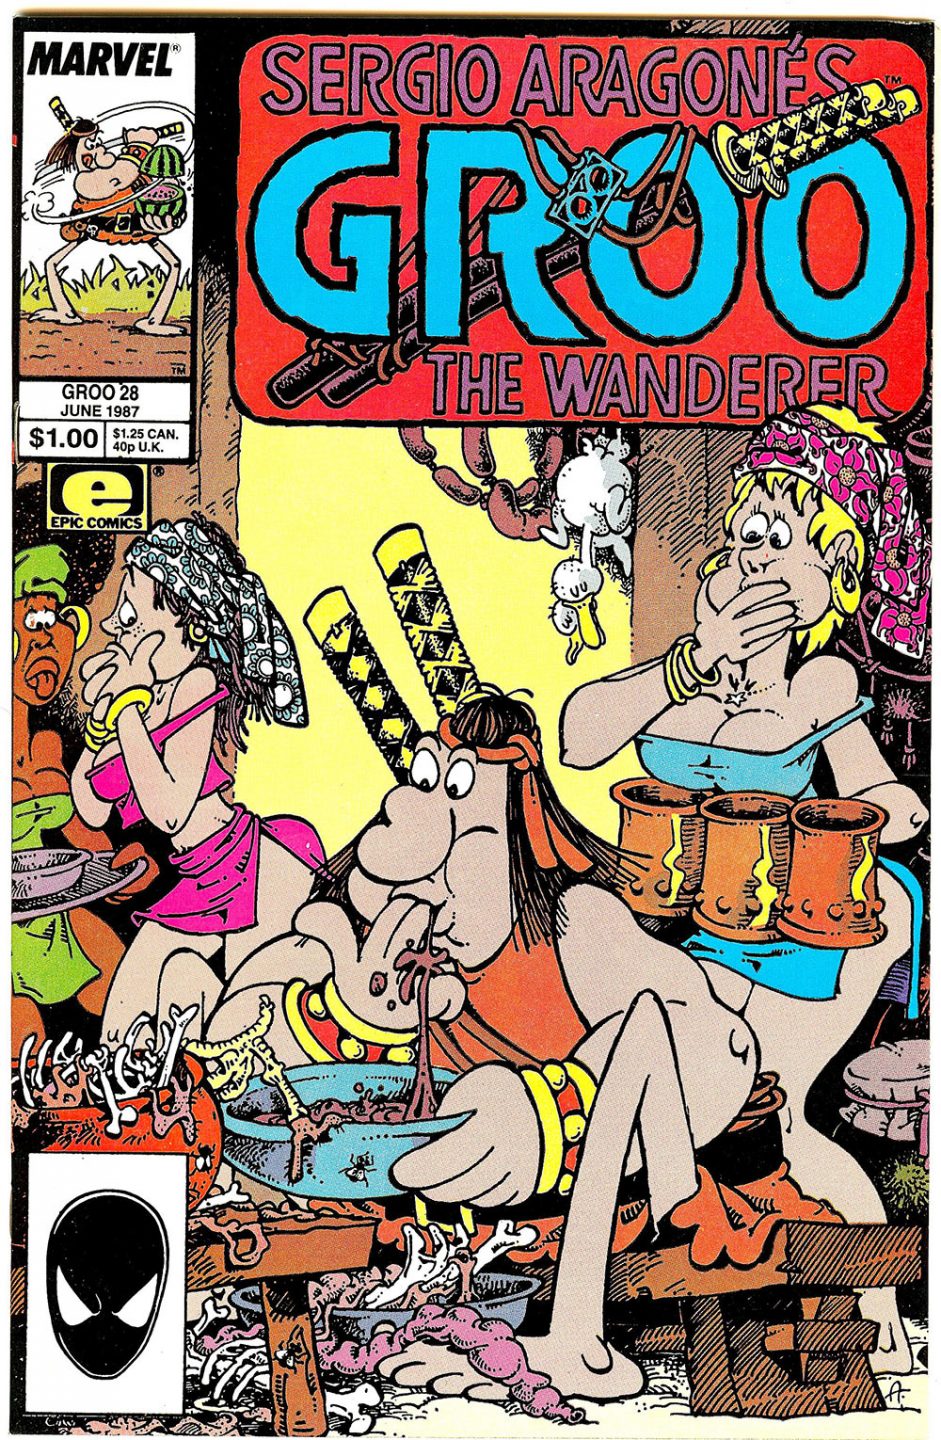 Sergio Aragonés' long-running comic creation "Groo the Wanderer."